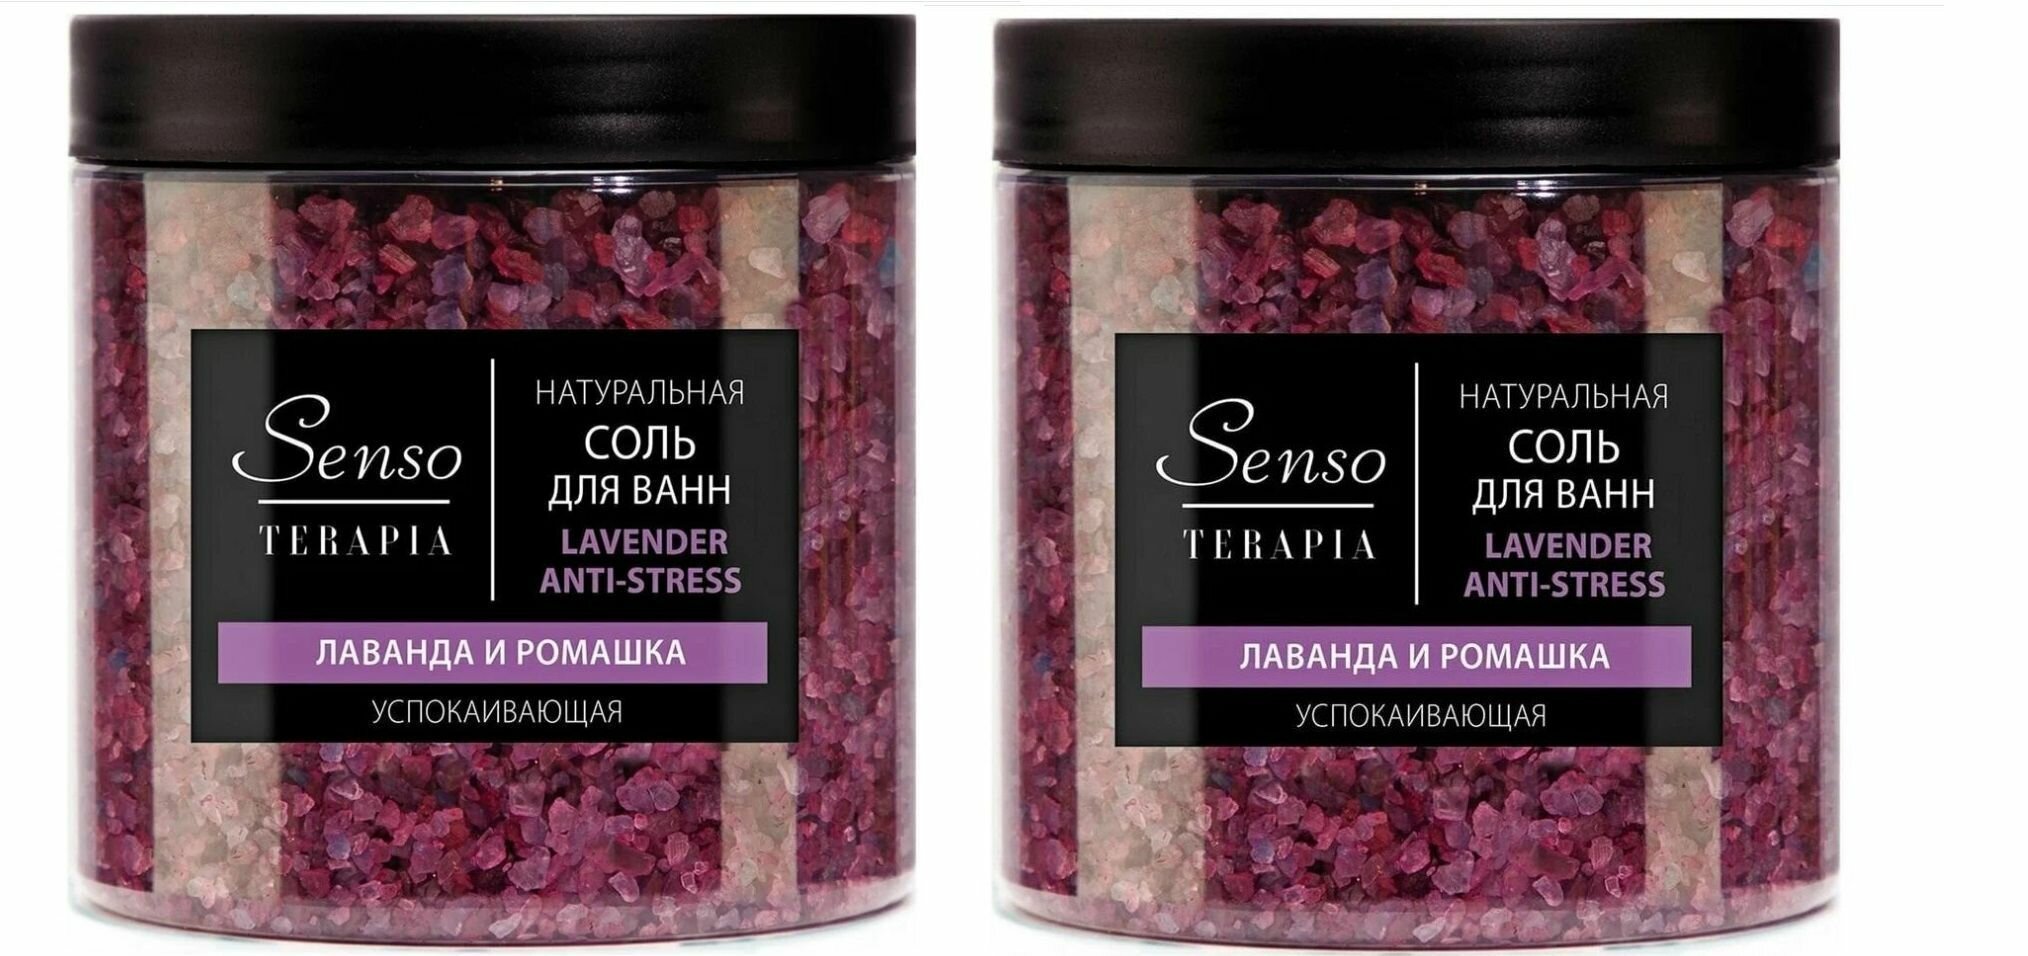 Senso Terapia Соль для ванн Lavender Anti-stress успокаивающая 560г, 2 шт